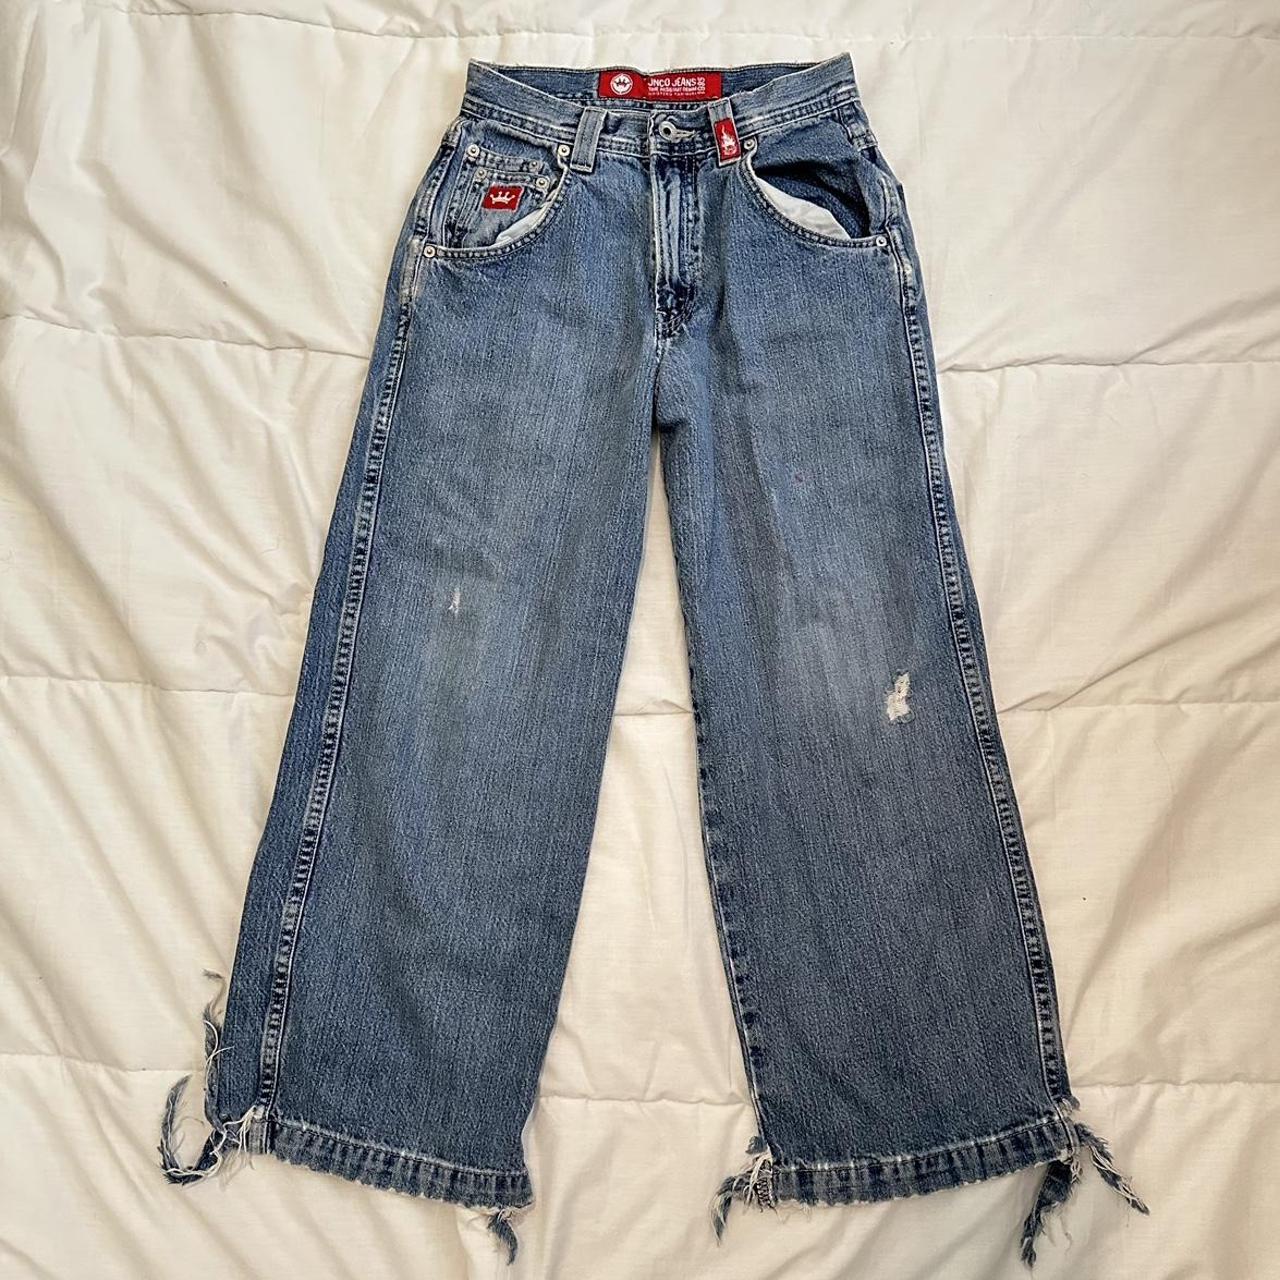 Vintage 90s 00s JNCO crown jeans! - Authentic JNCO -... - Depop